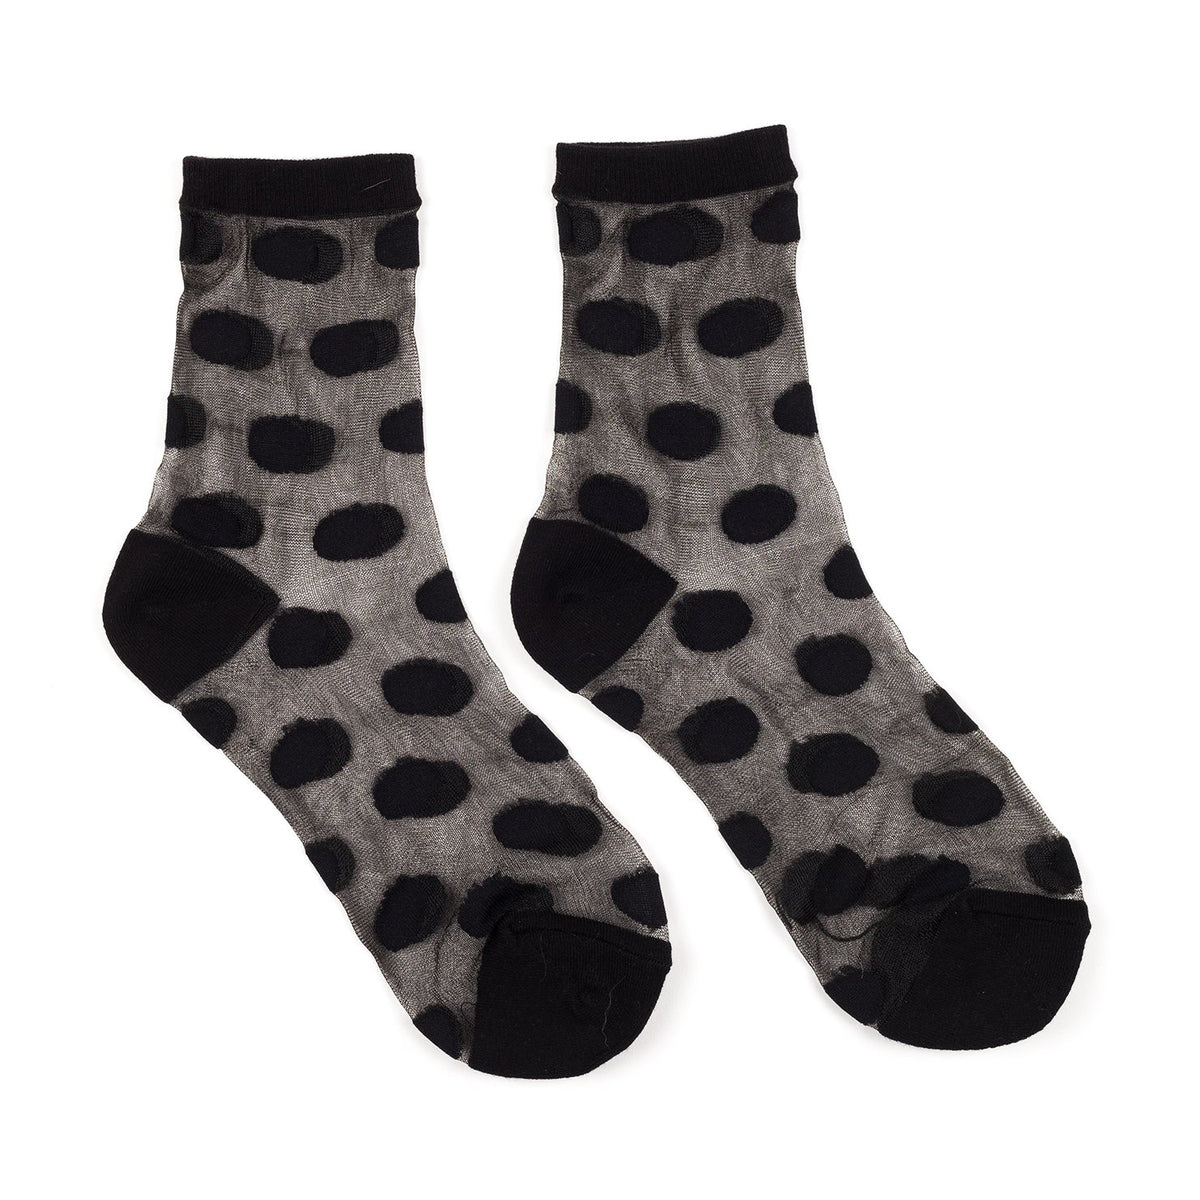 Women's Sheer Anklet Socks With Mesh Polka Dot Bow - A New Day™ Black 4-10  : Target